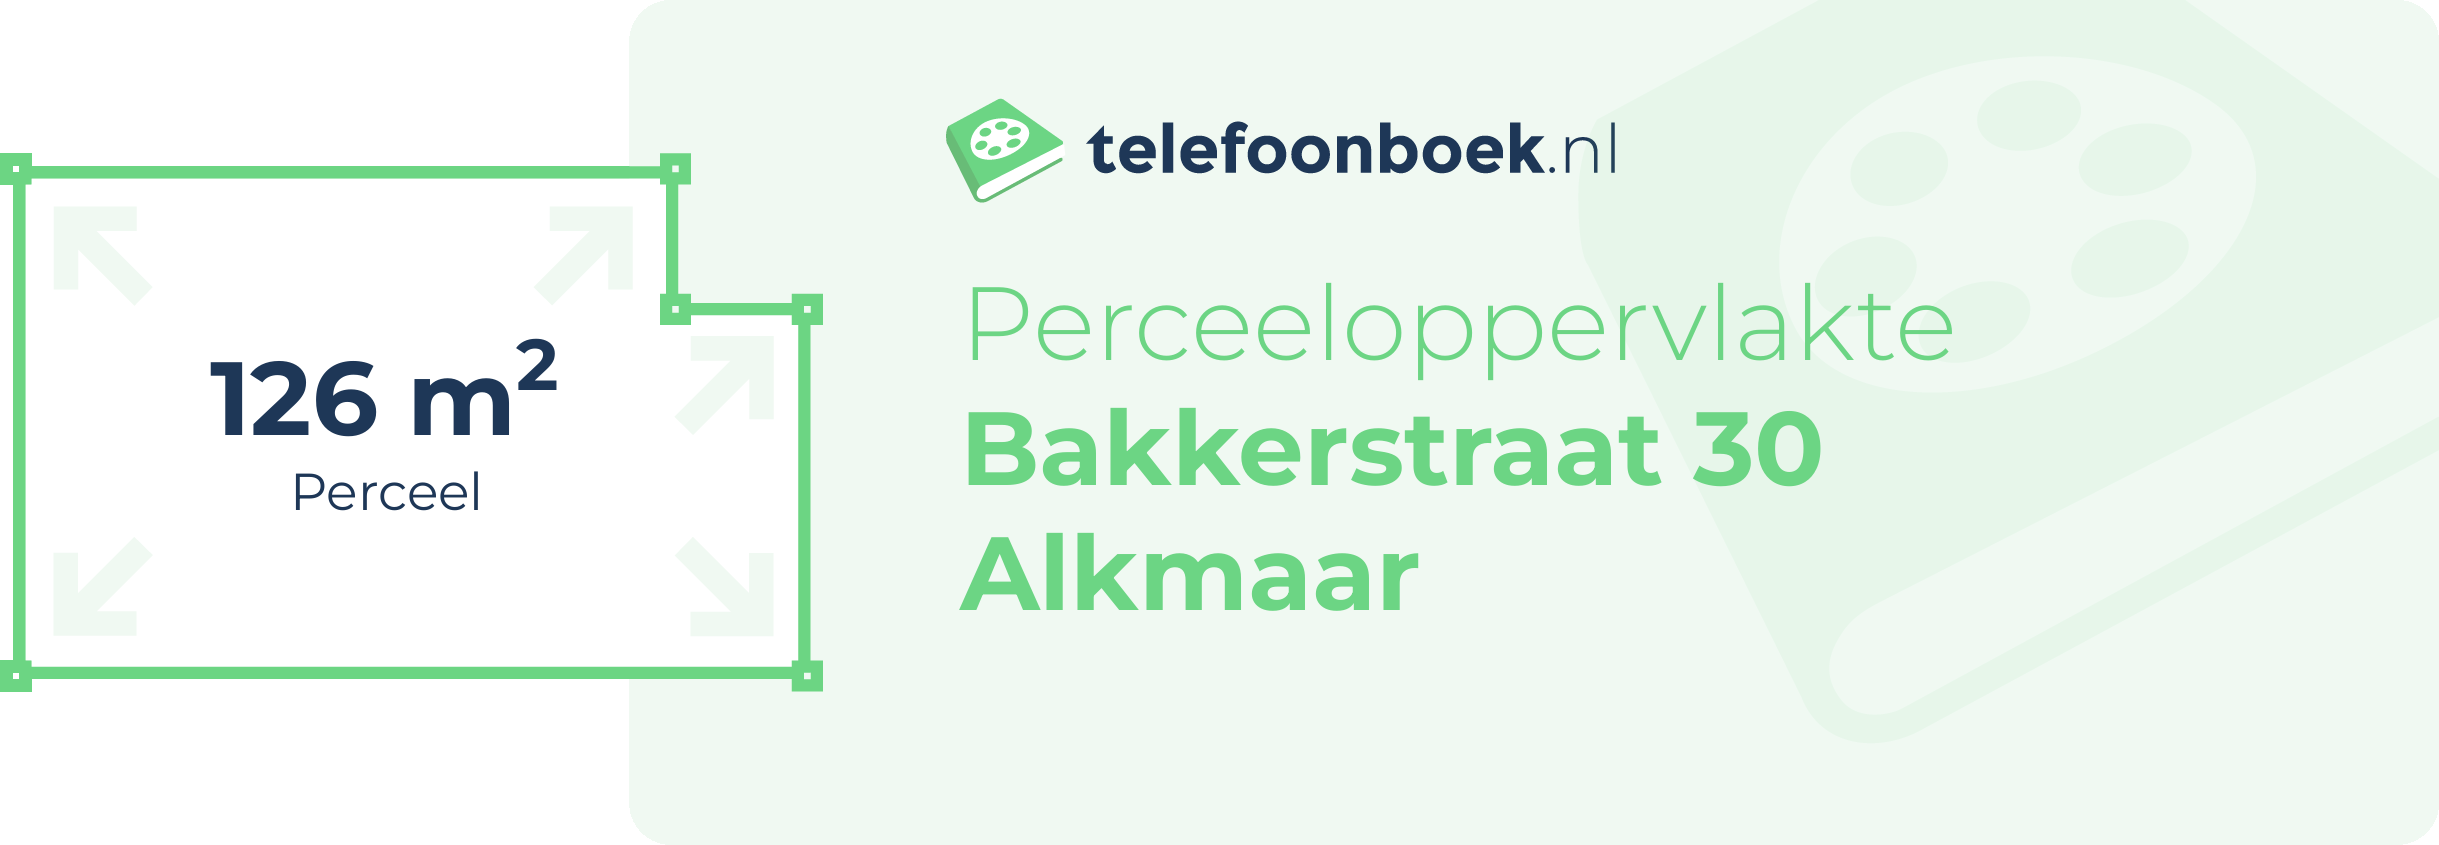 Perceeloppervlakte Bakkerstraat 30 Alkmaar